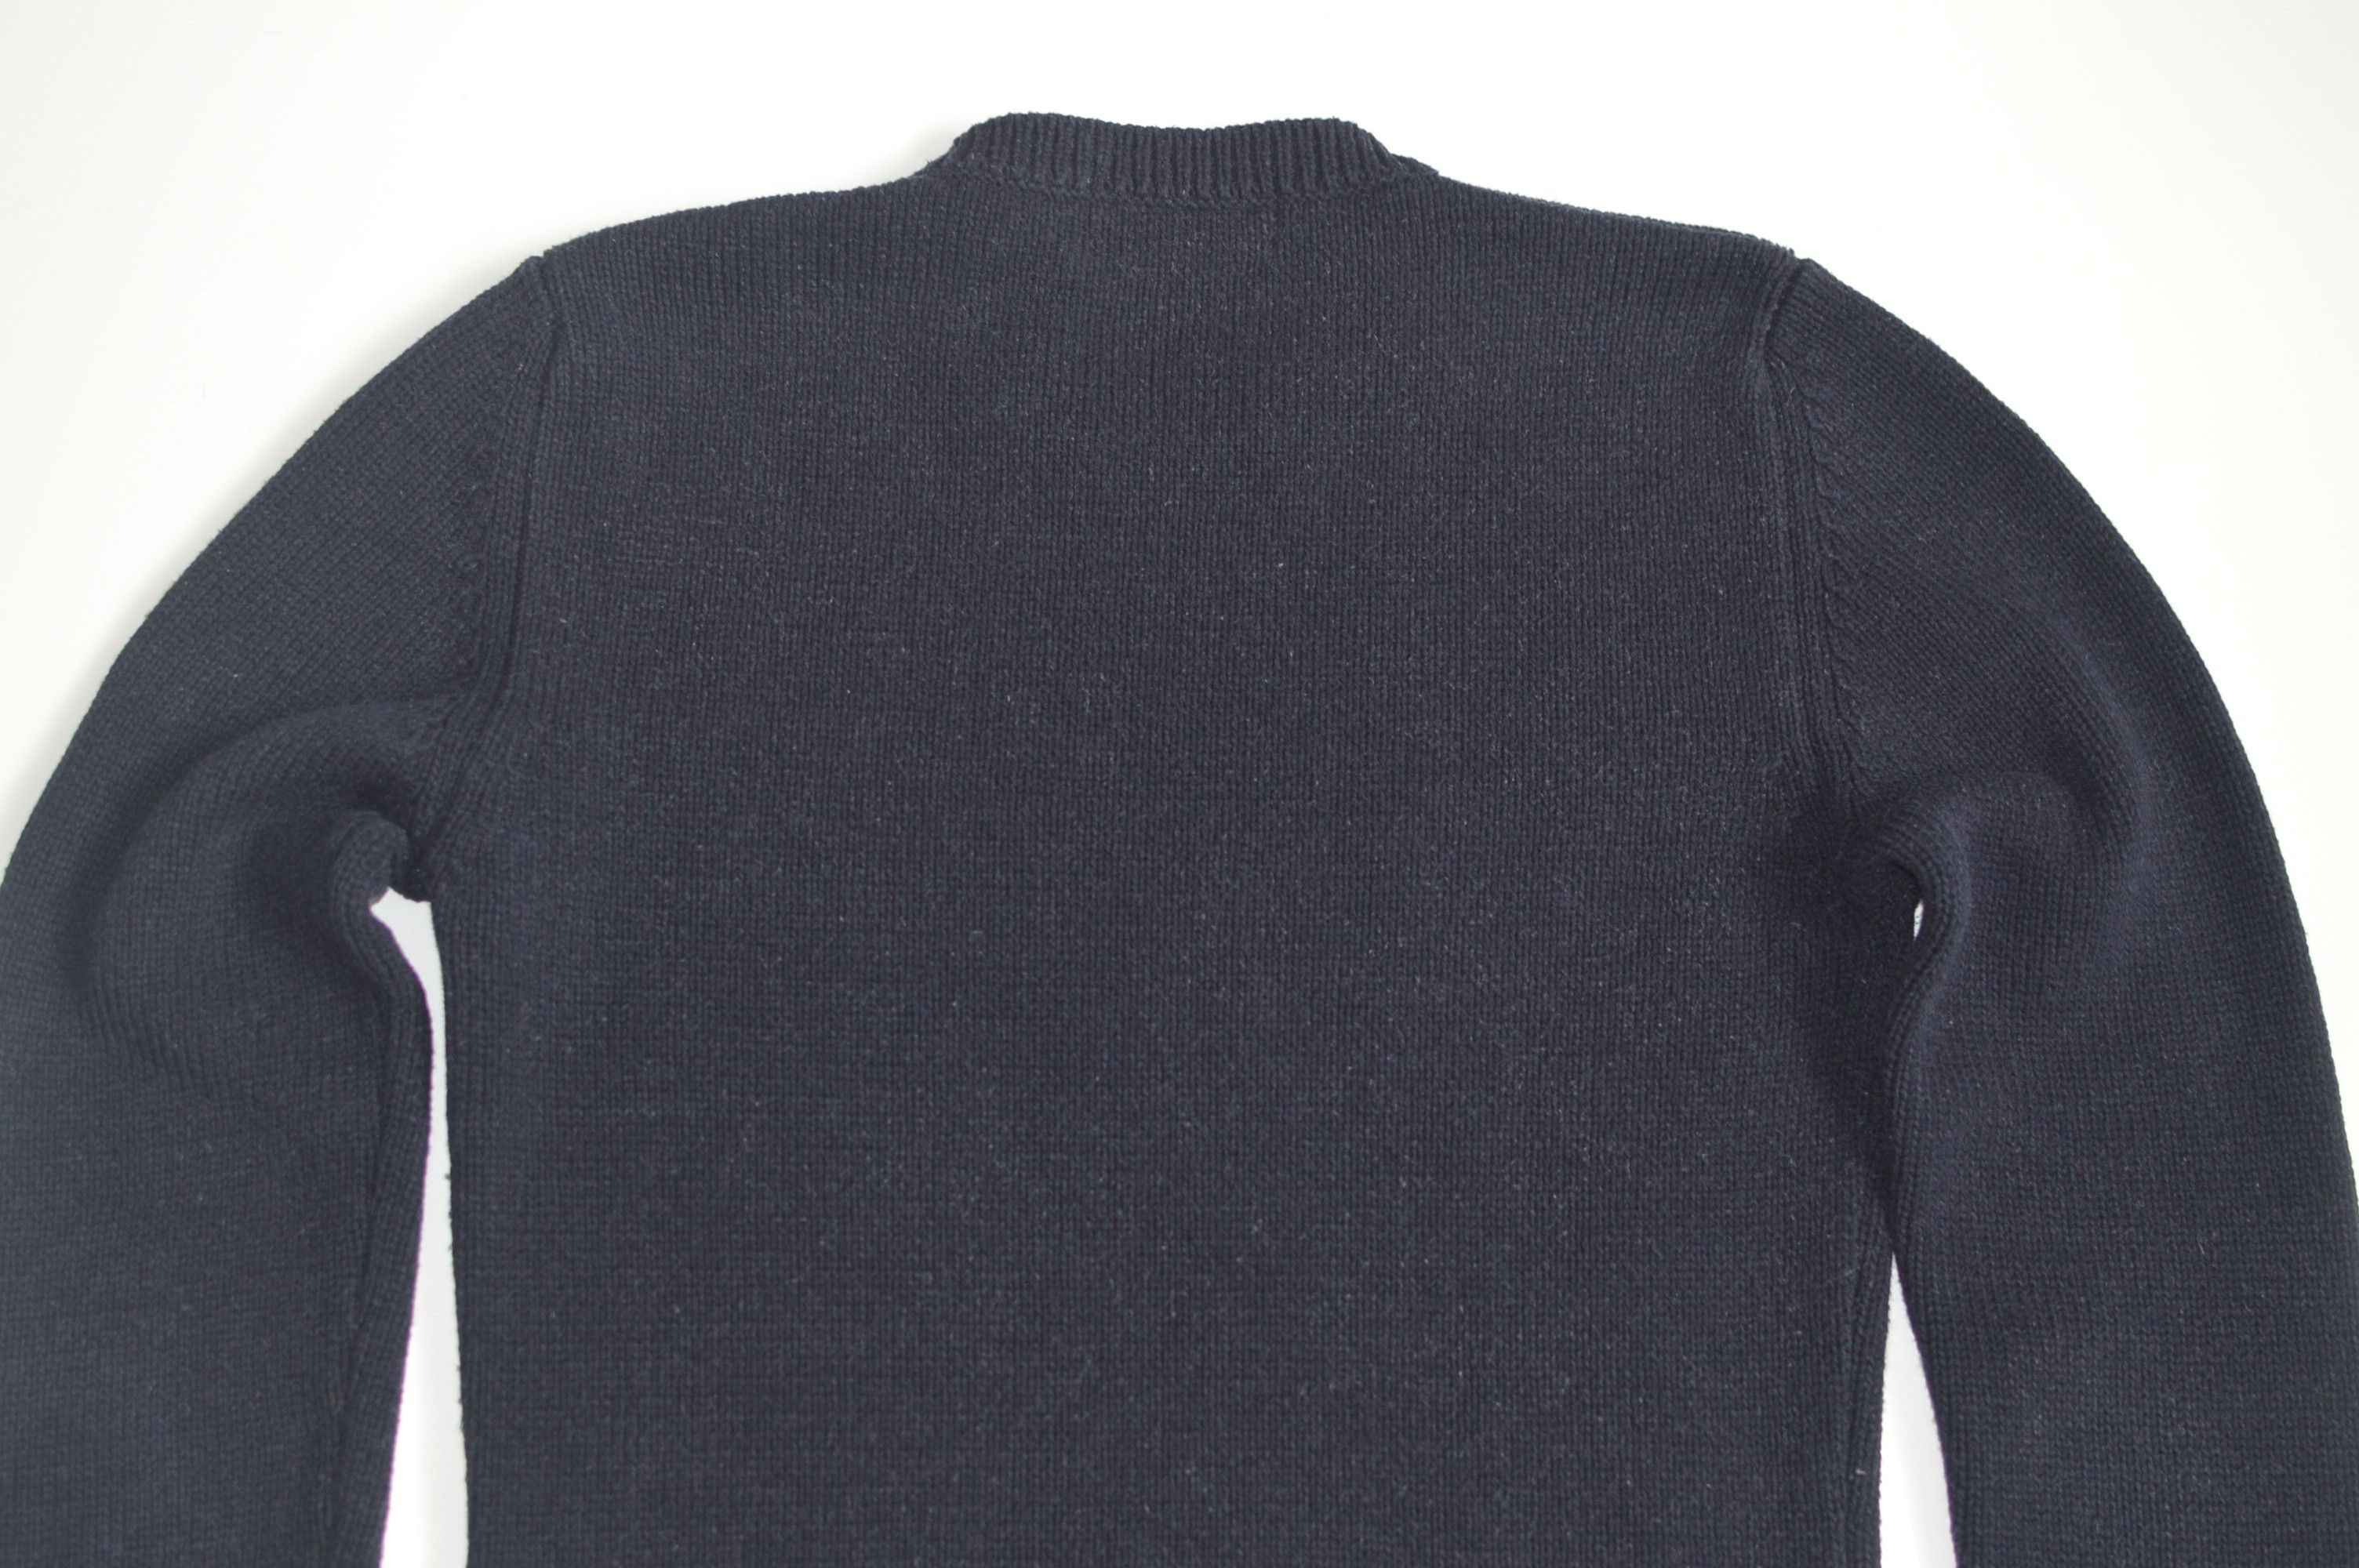 Vintage Vintage Thomas Burberry 1835 Sweater Wmns Size US S / EU 44-46 / 1 - 7 Thumbnail